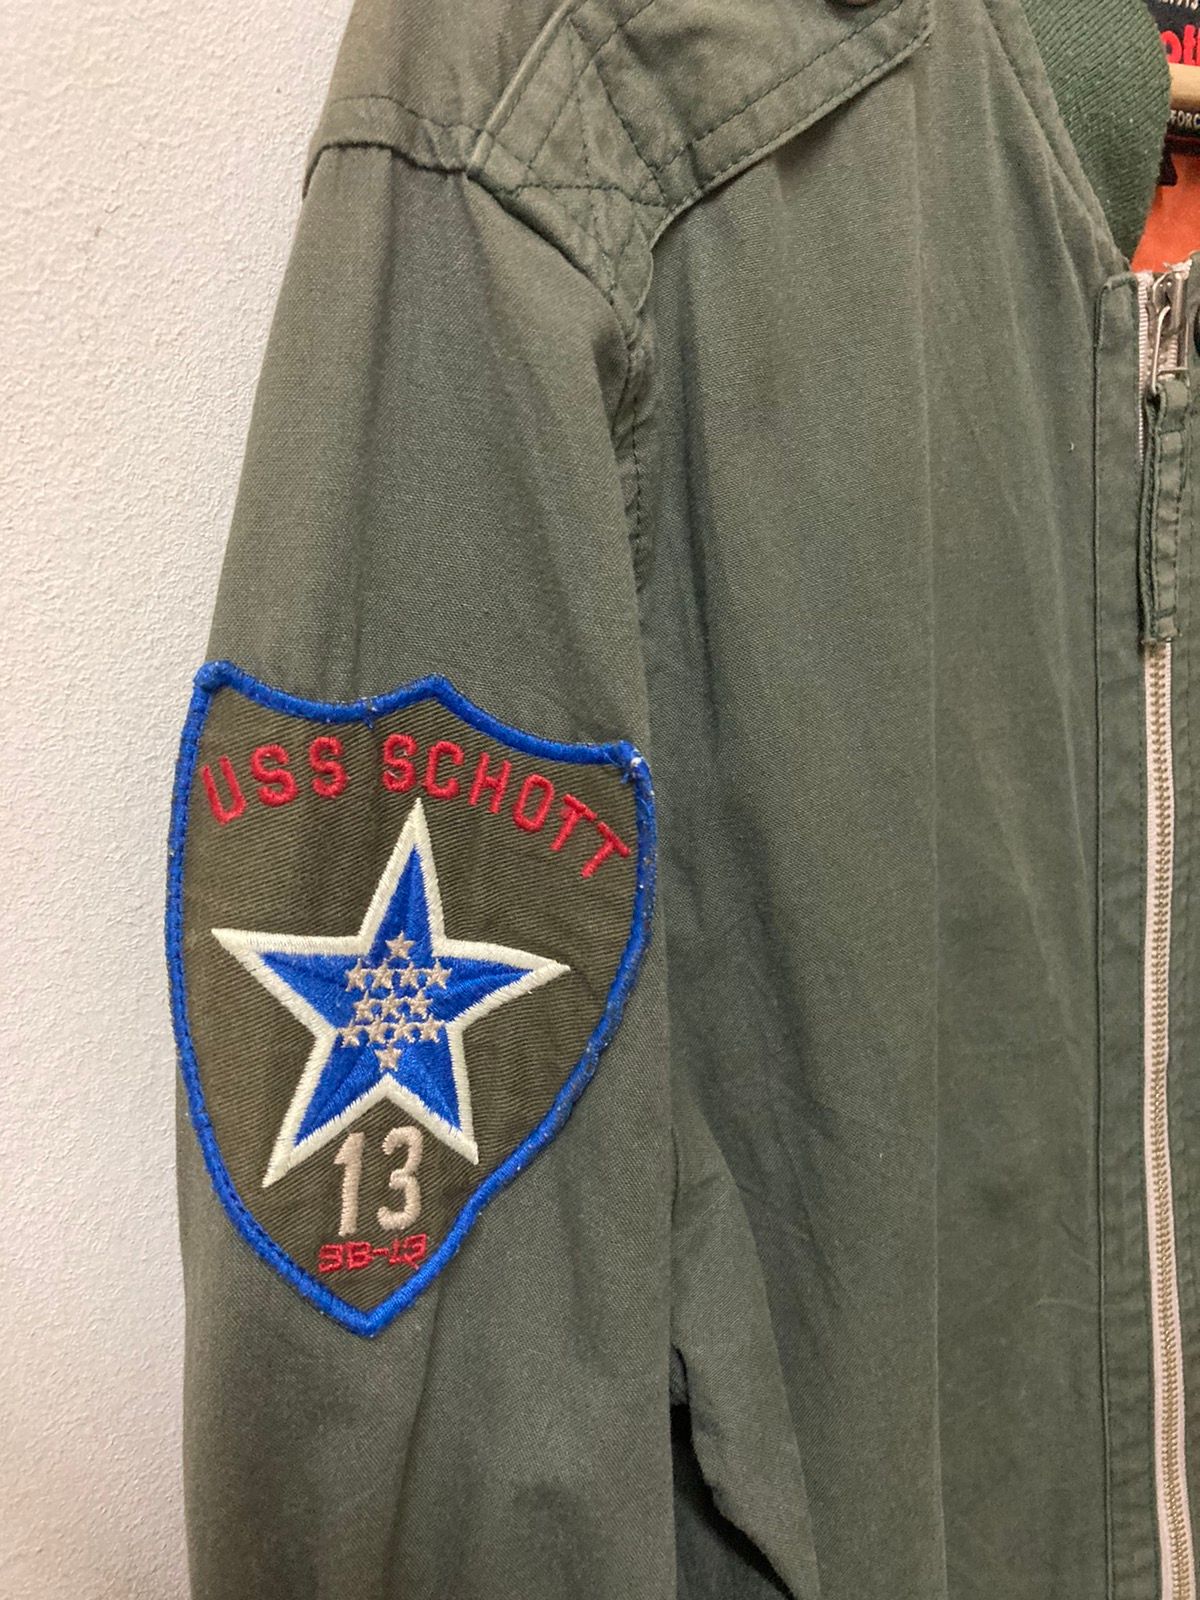 Schott Jacket Intermediate Civ/Mil1913 U.S Armed Forces - 9